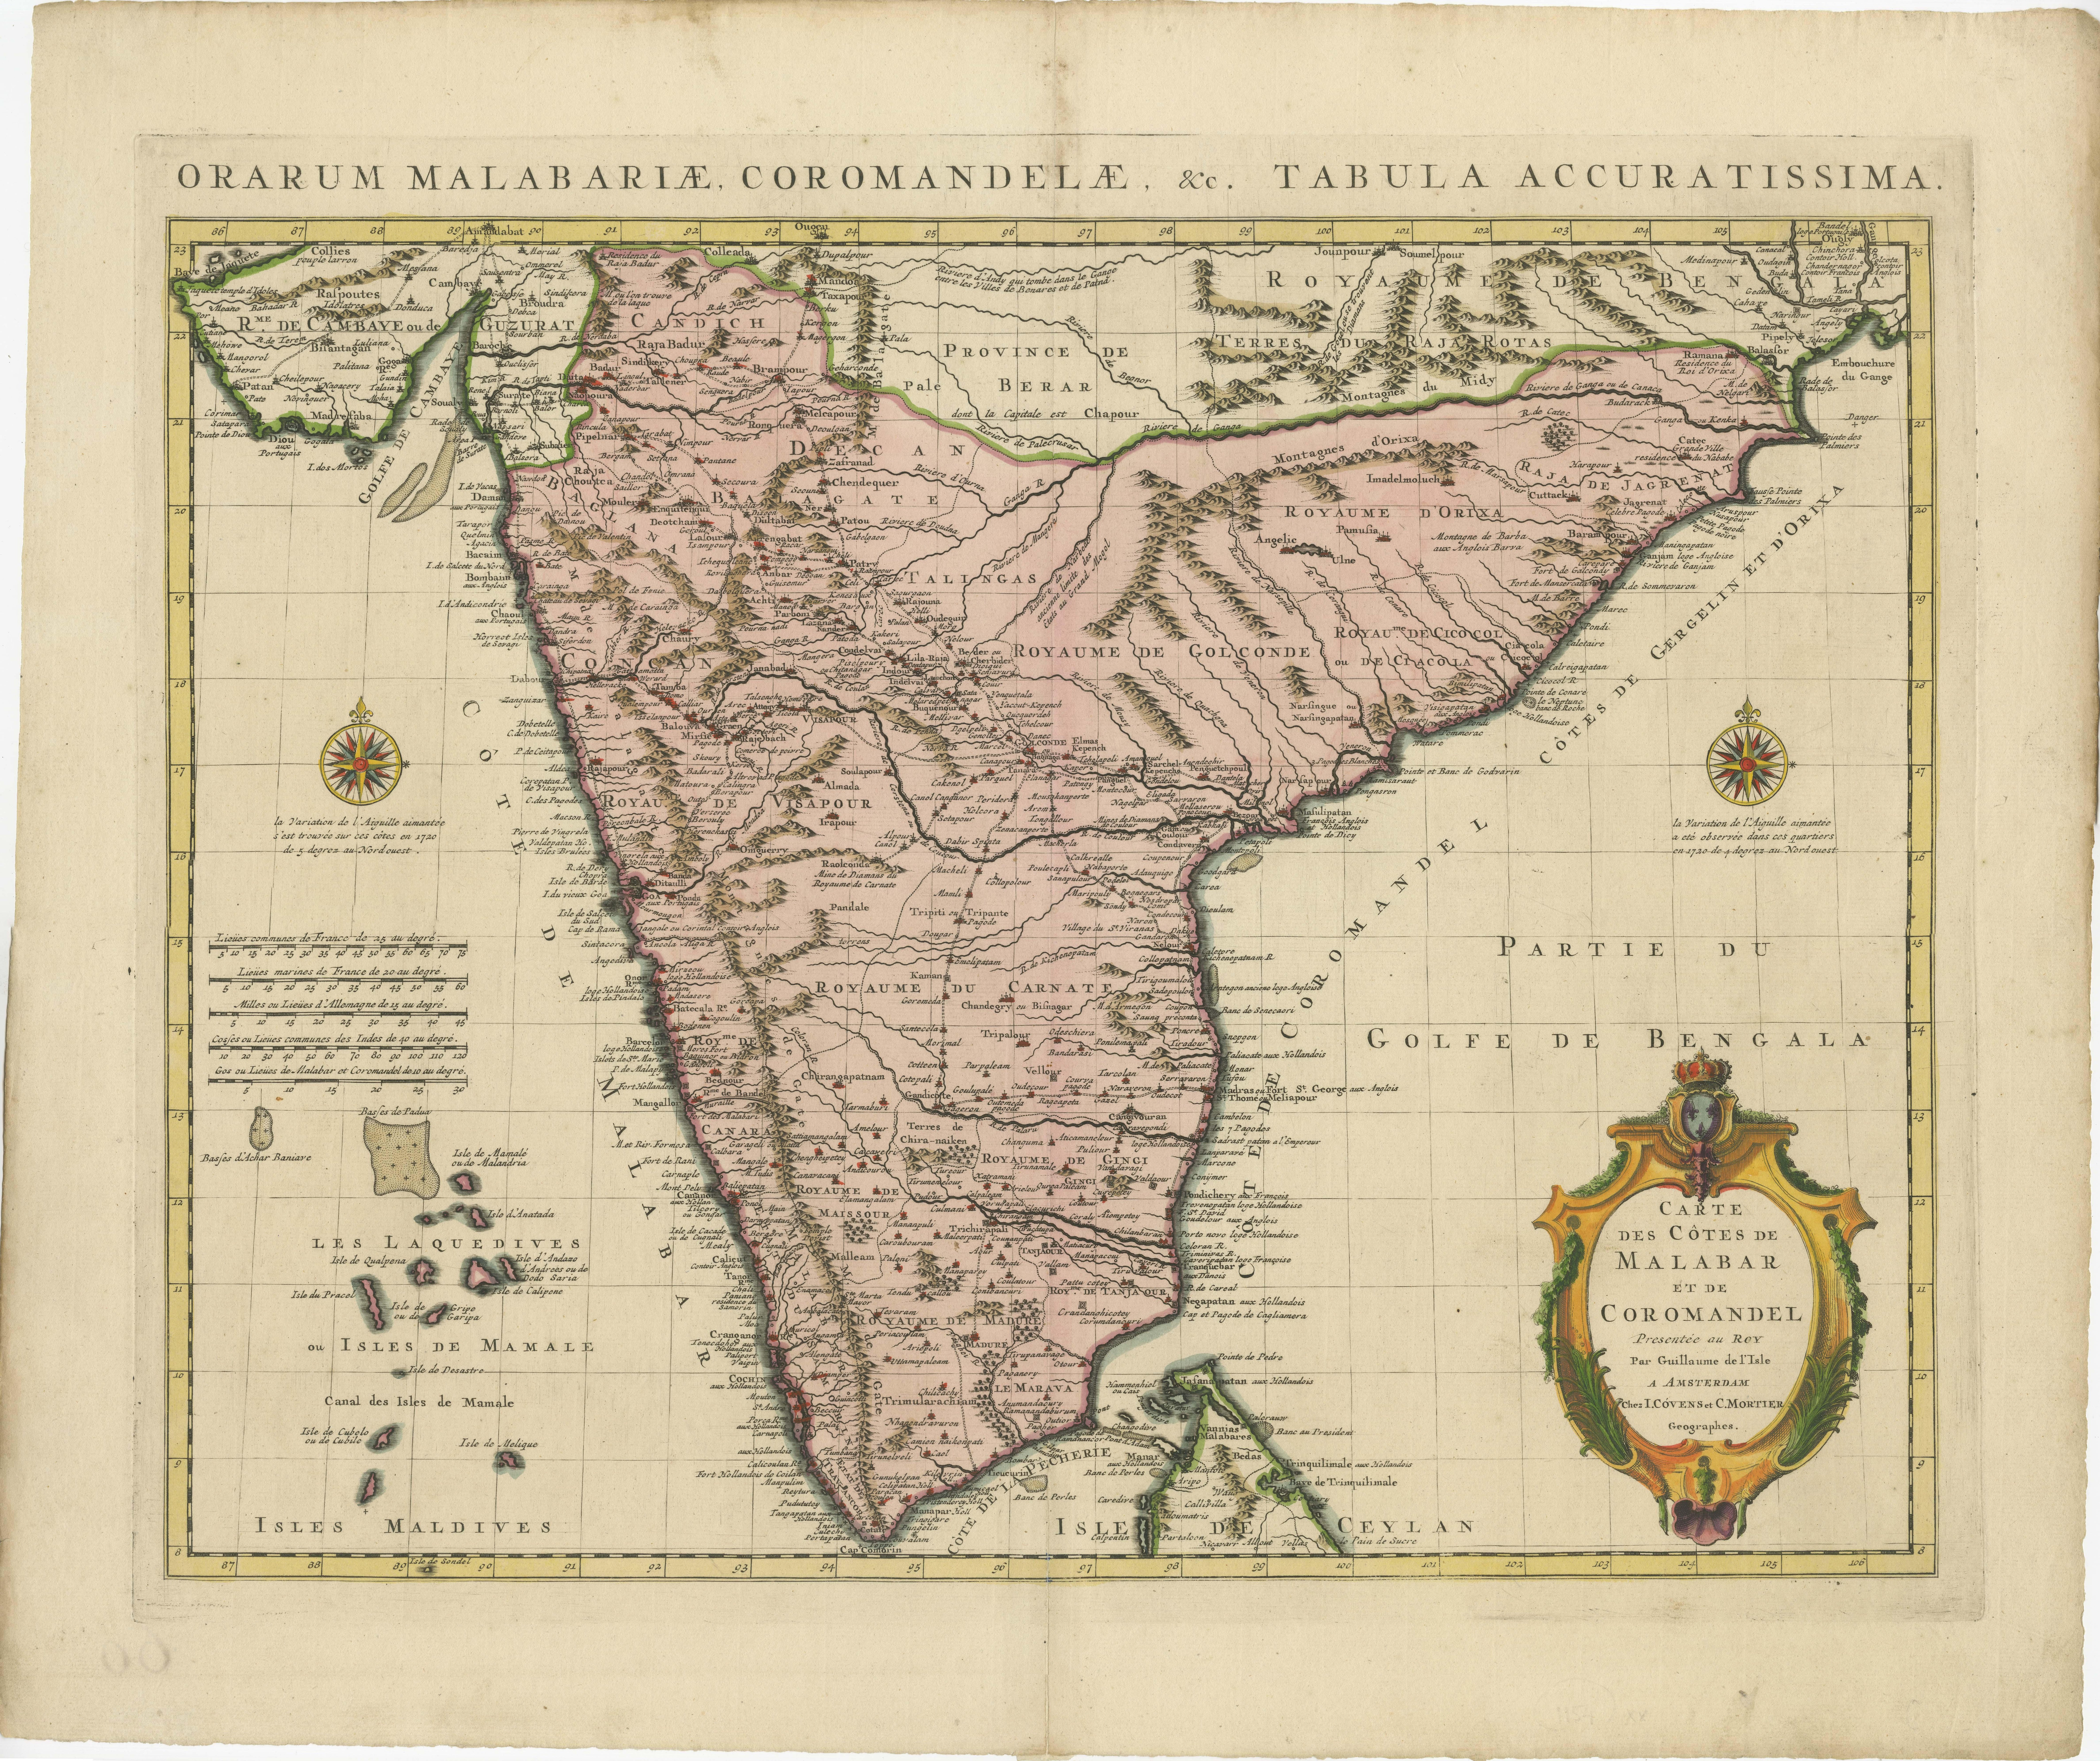 Antique map titled 'Orarum Malabariae, Coromandelae &c Tabula Accuratissima - Carte des Cotes de Malabar et de Coromandel'. Beautiful map of the southern part of India. It focuses on trade routes within India, as well as the Coromandel and Malabar